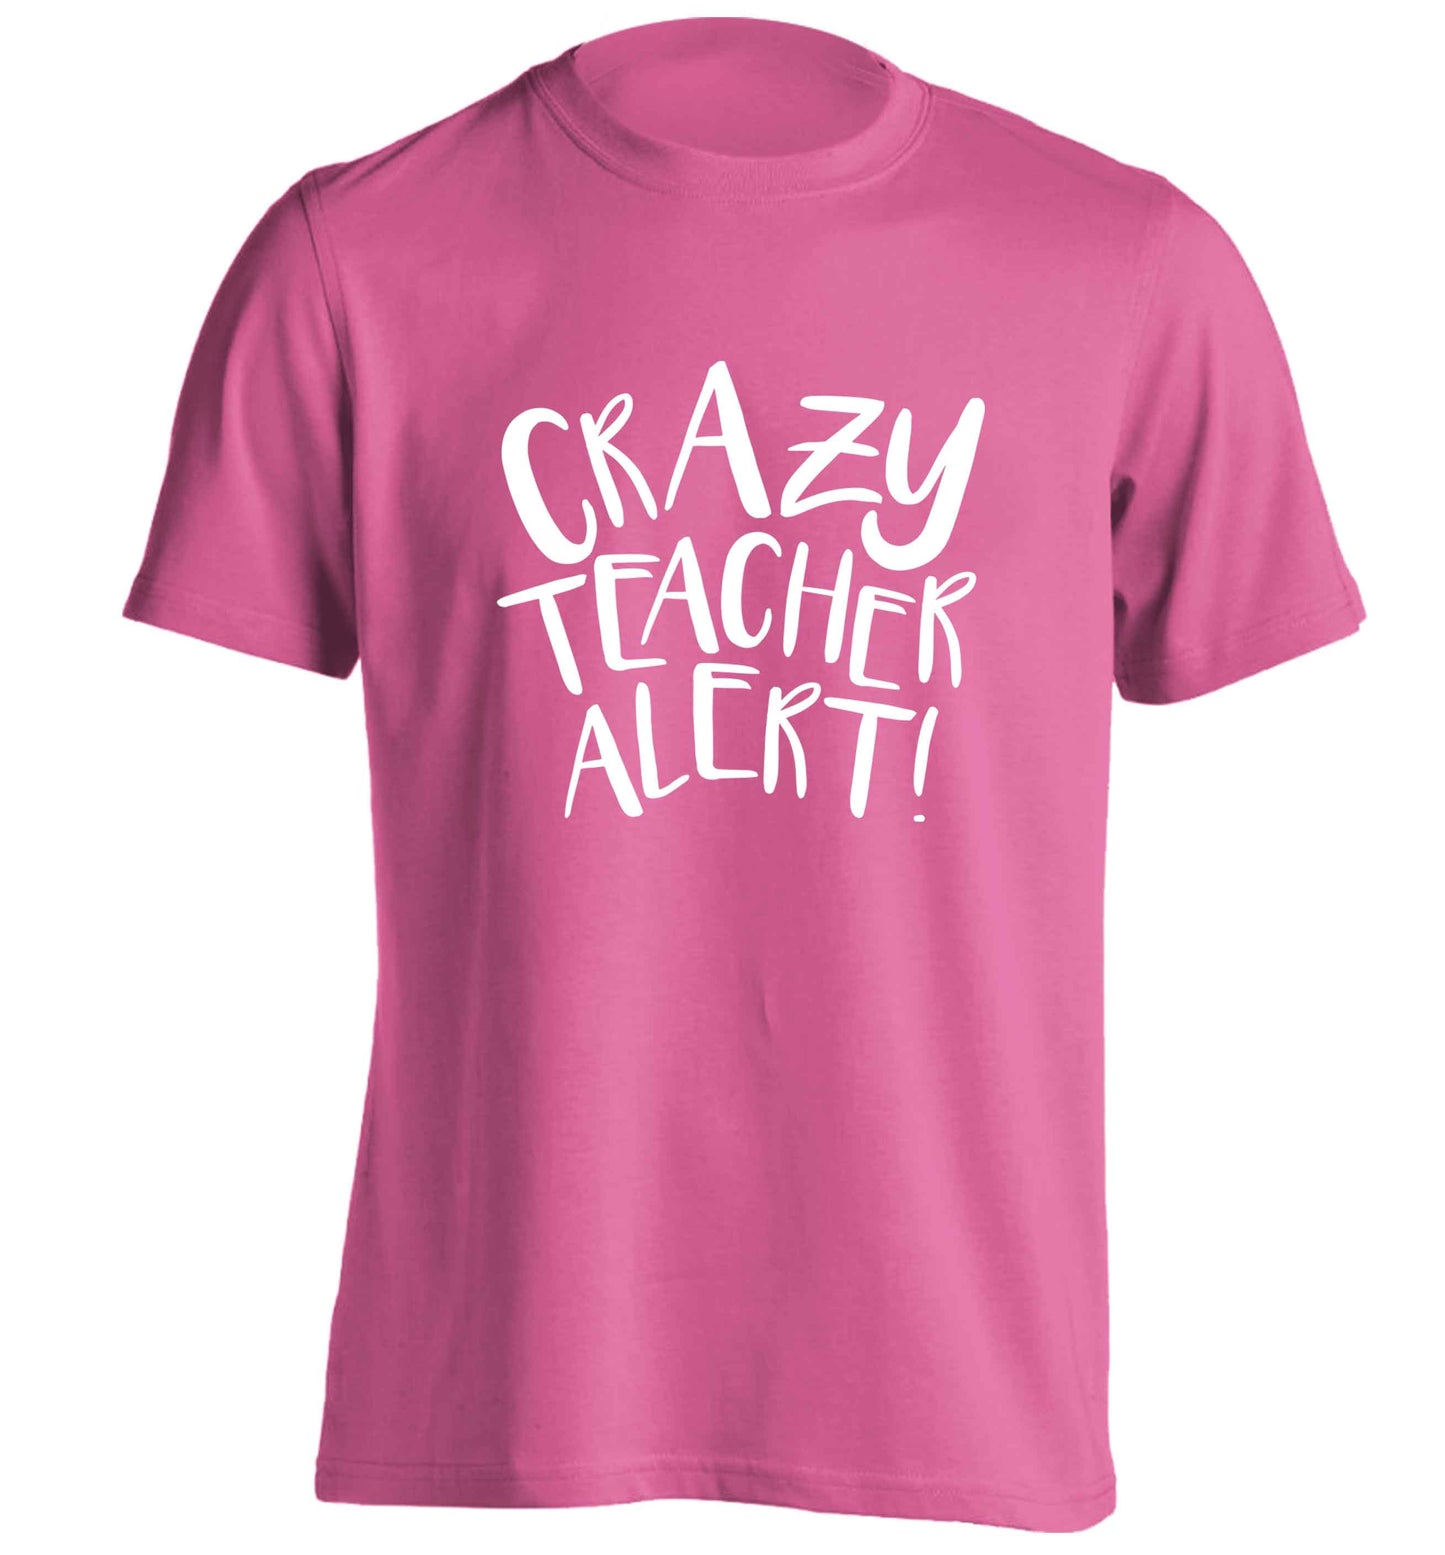 Crazy teacher alert adults unisex pink Tshirt 2XL